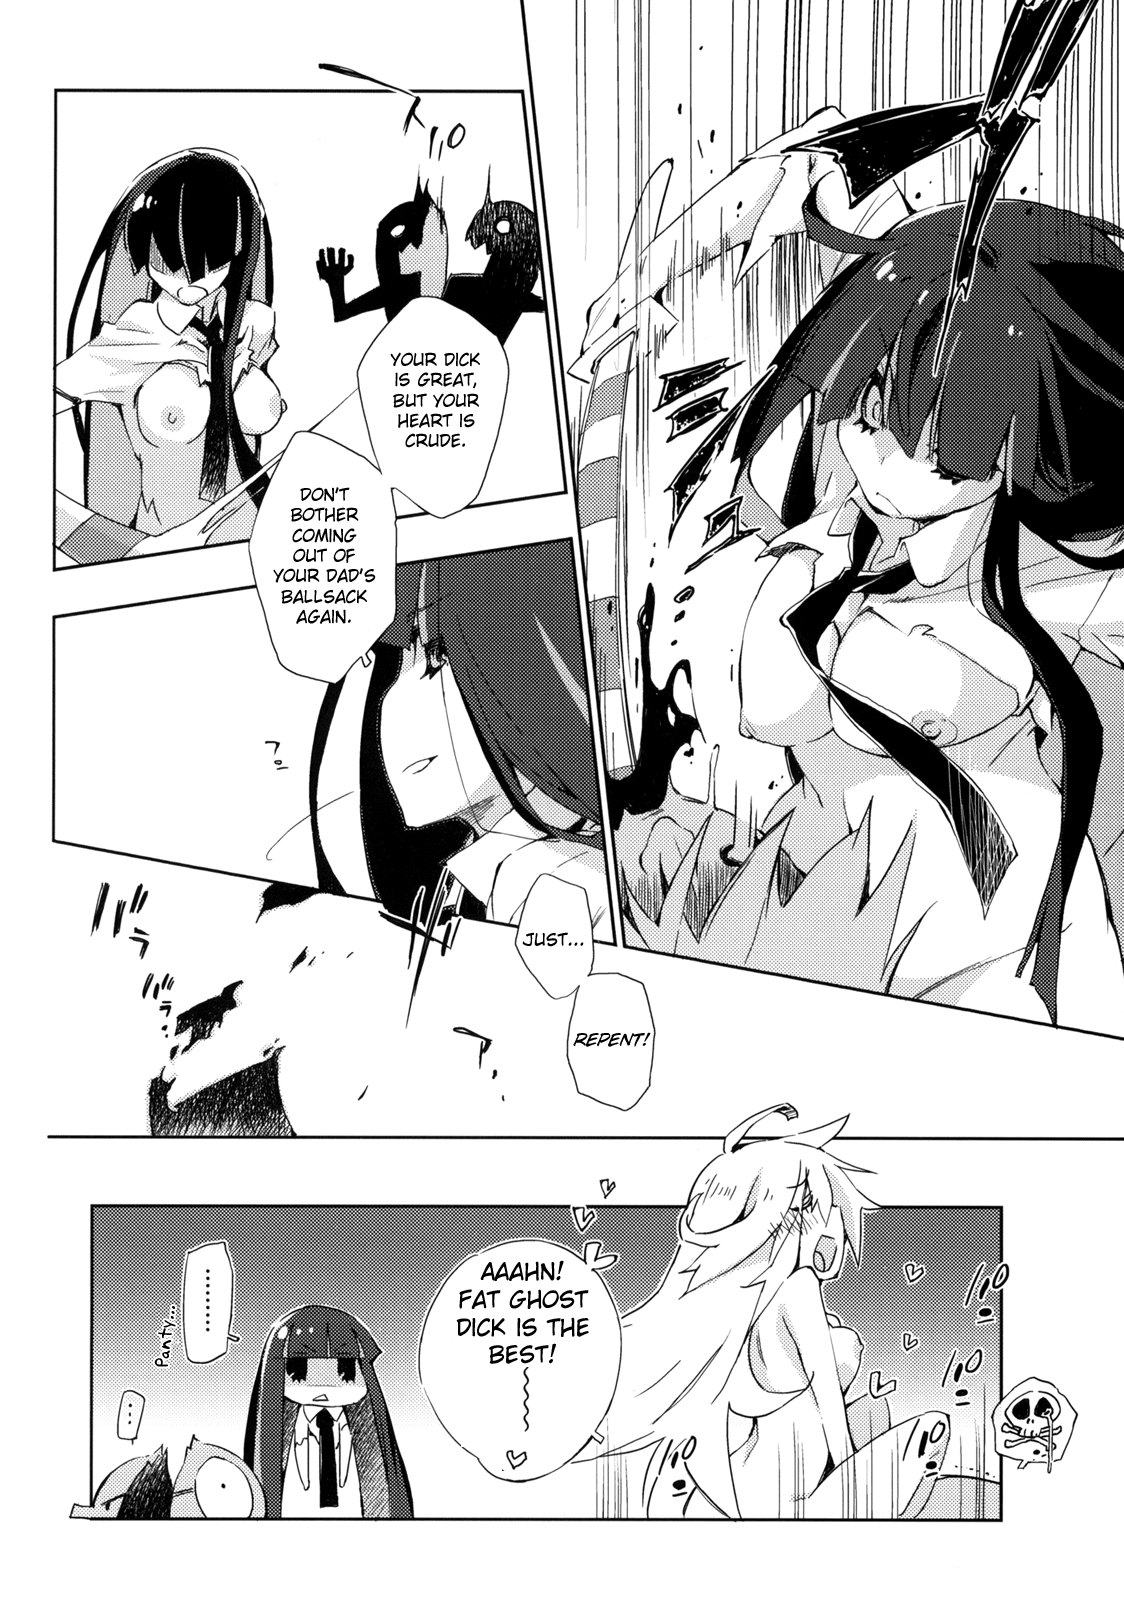 inmoral unmoral hentai manga picture 20